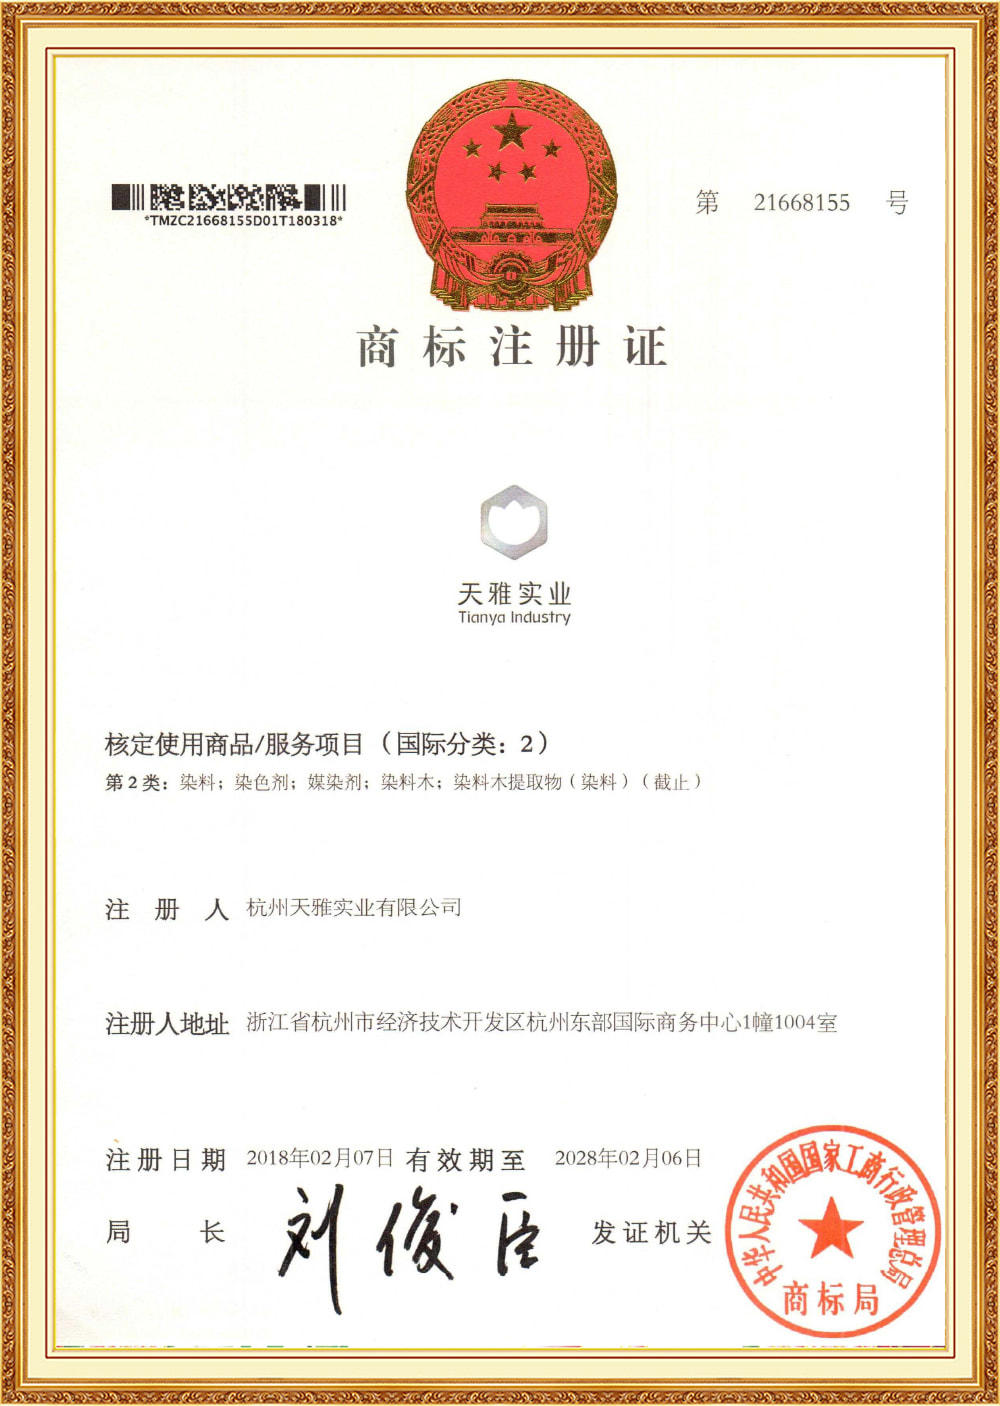 Hangzhou Tianya Industry Co., Ltd.